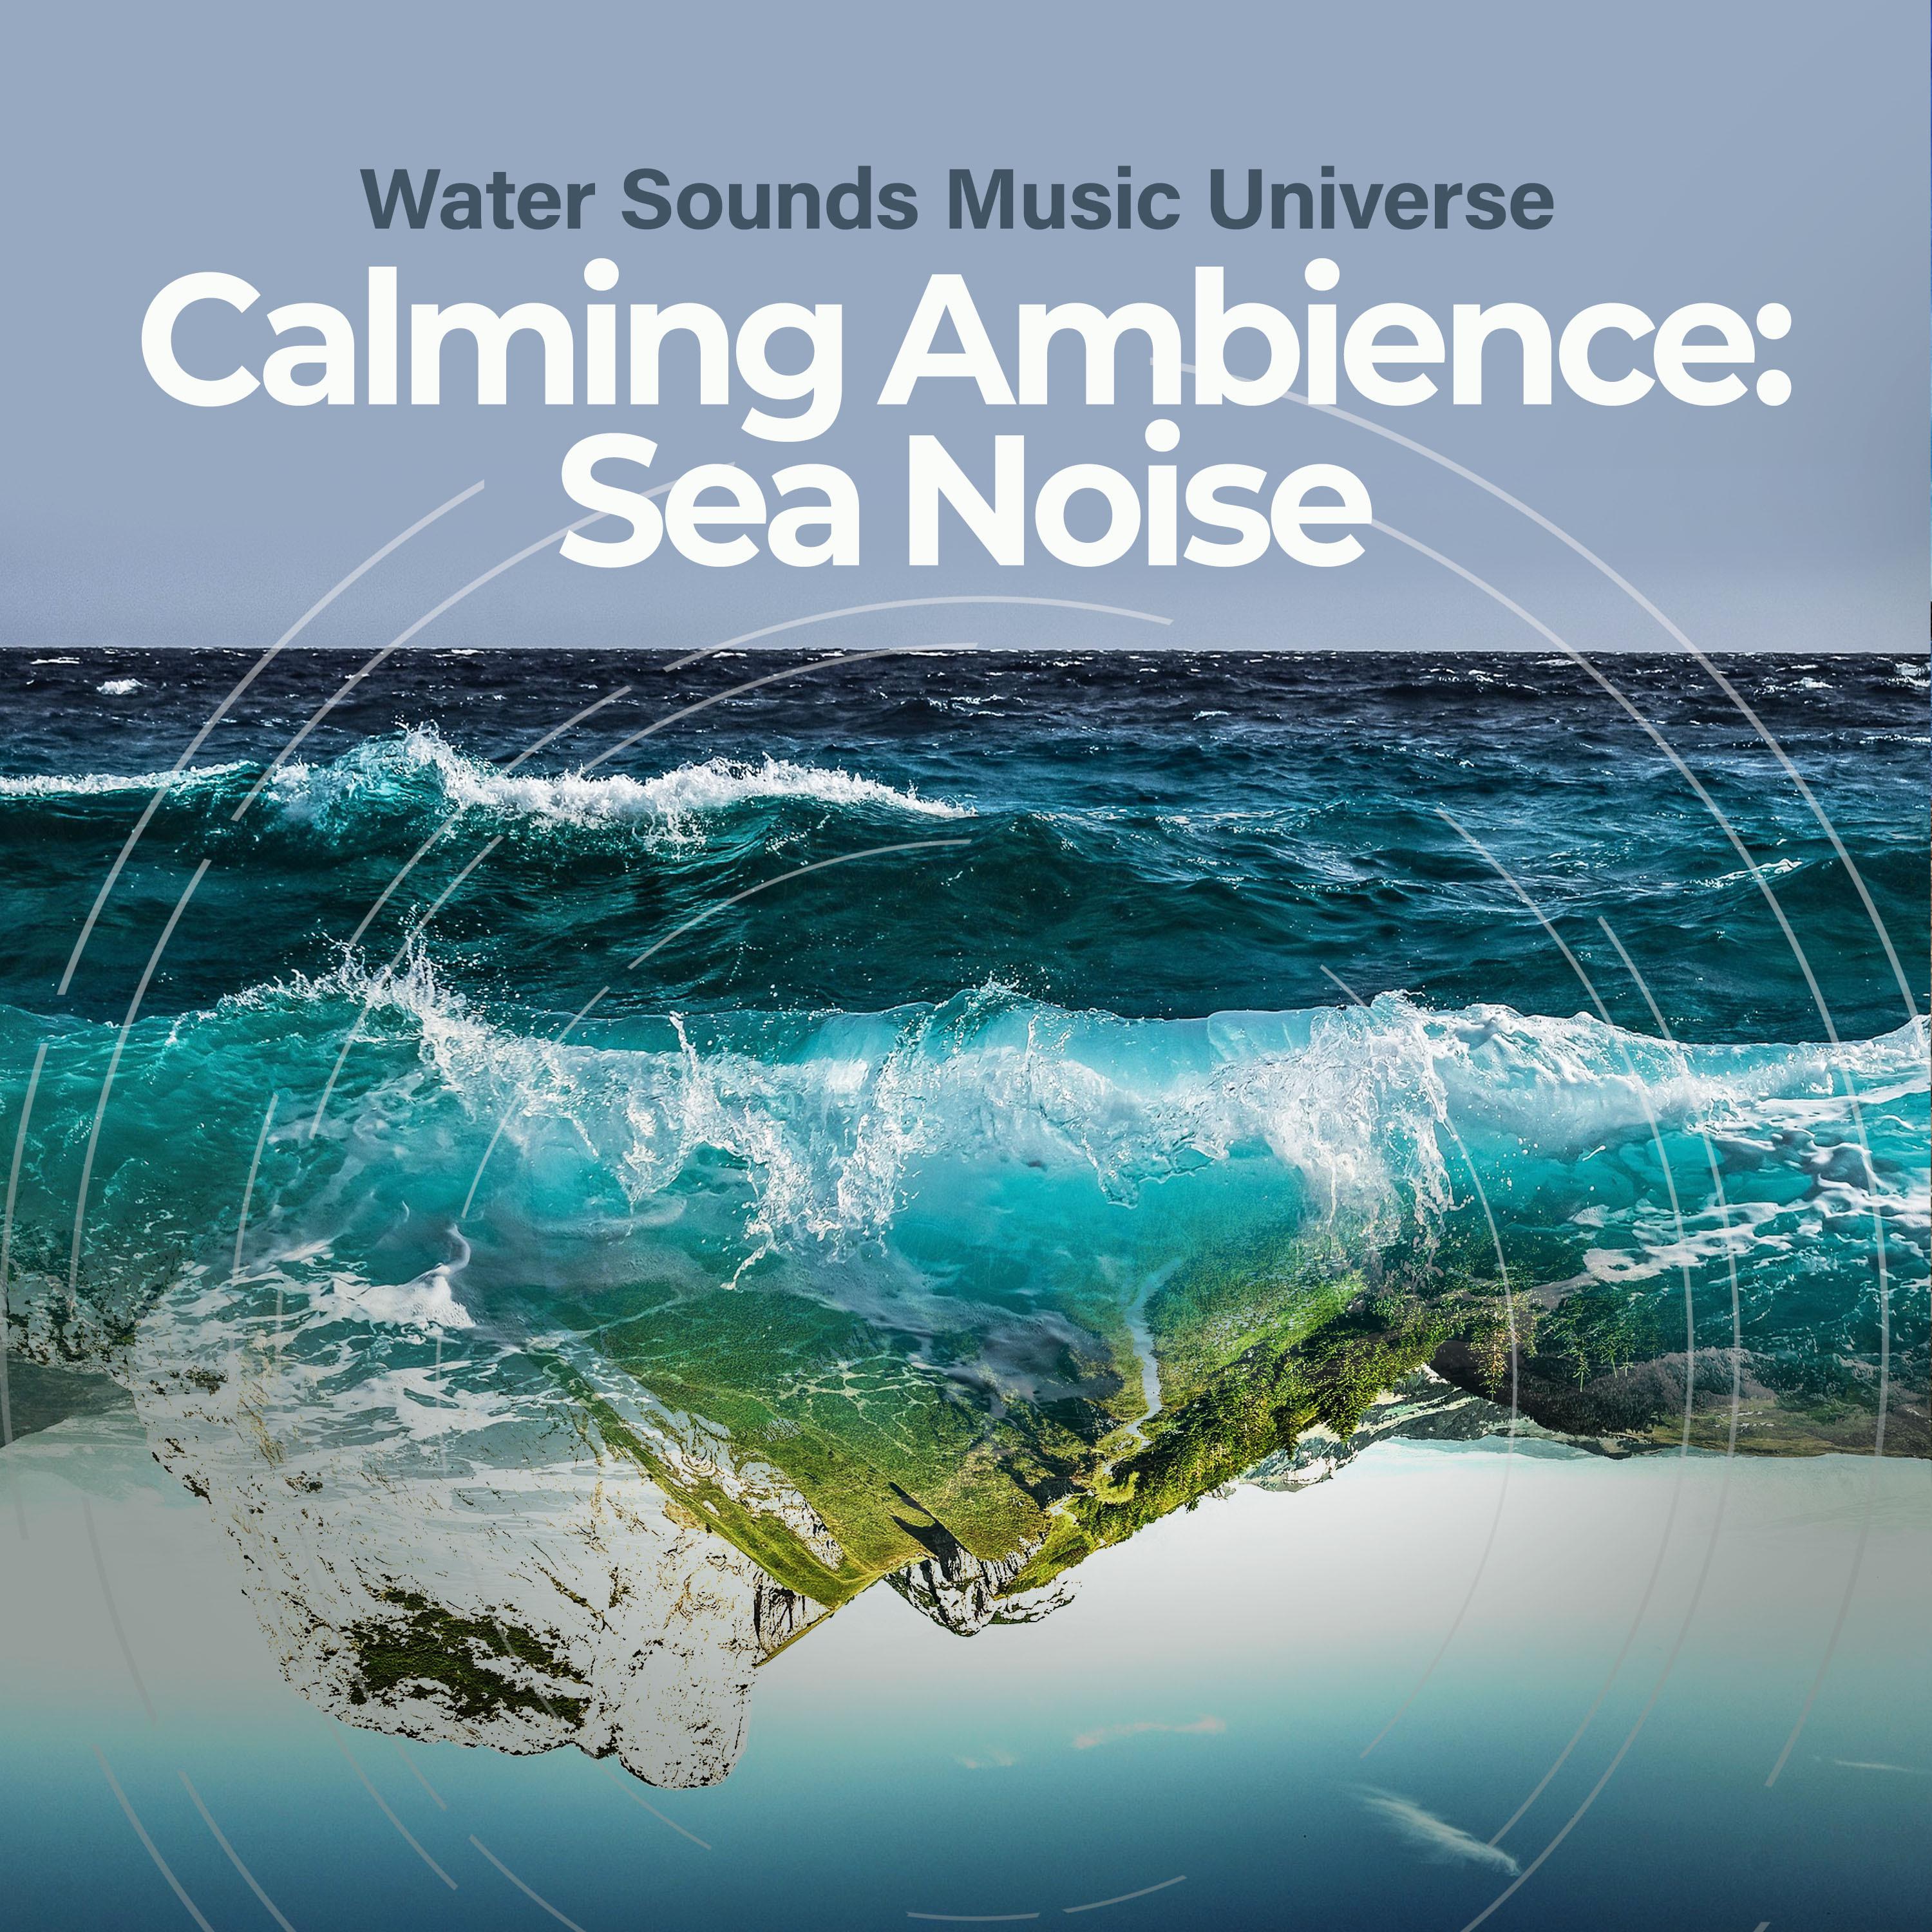 Calming Ambience: Sea Noise